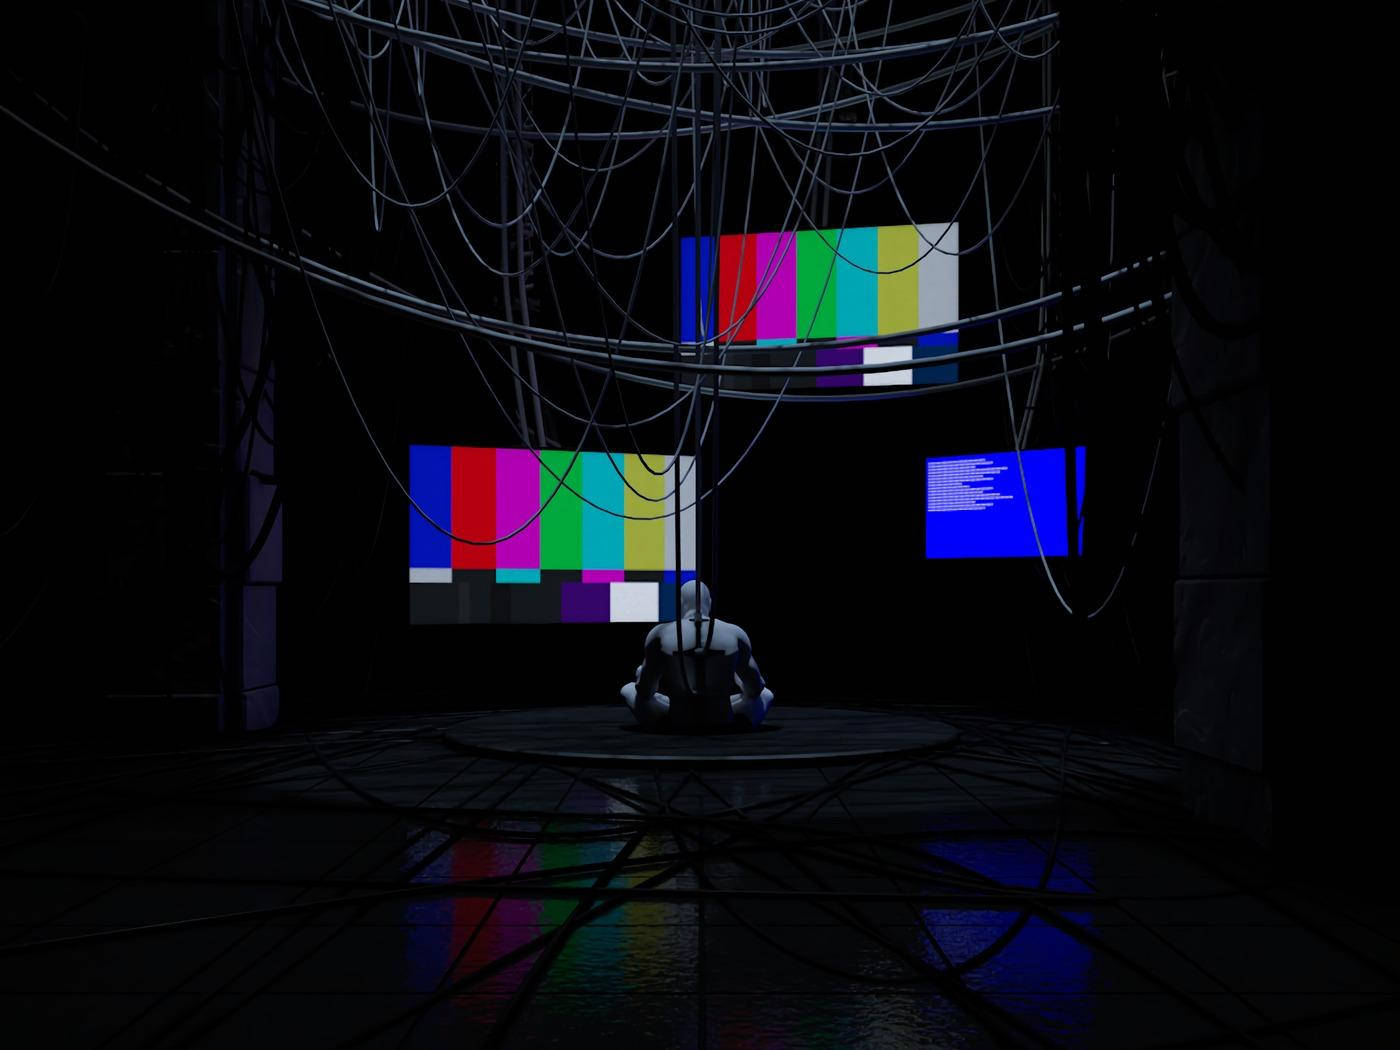 Eerie Tv Test Broadcast Patterns Background